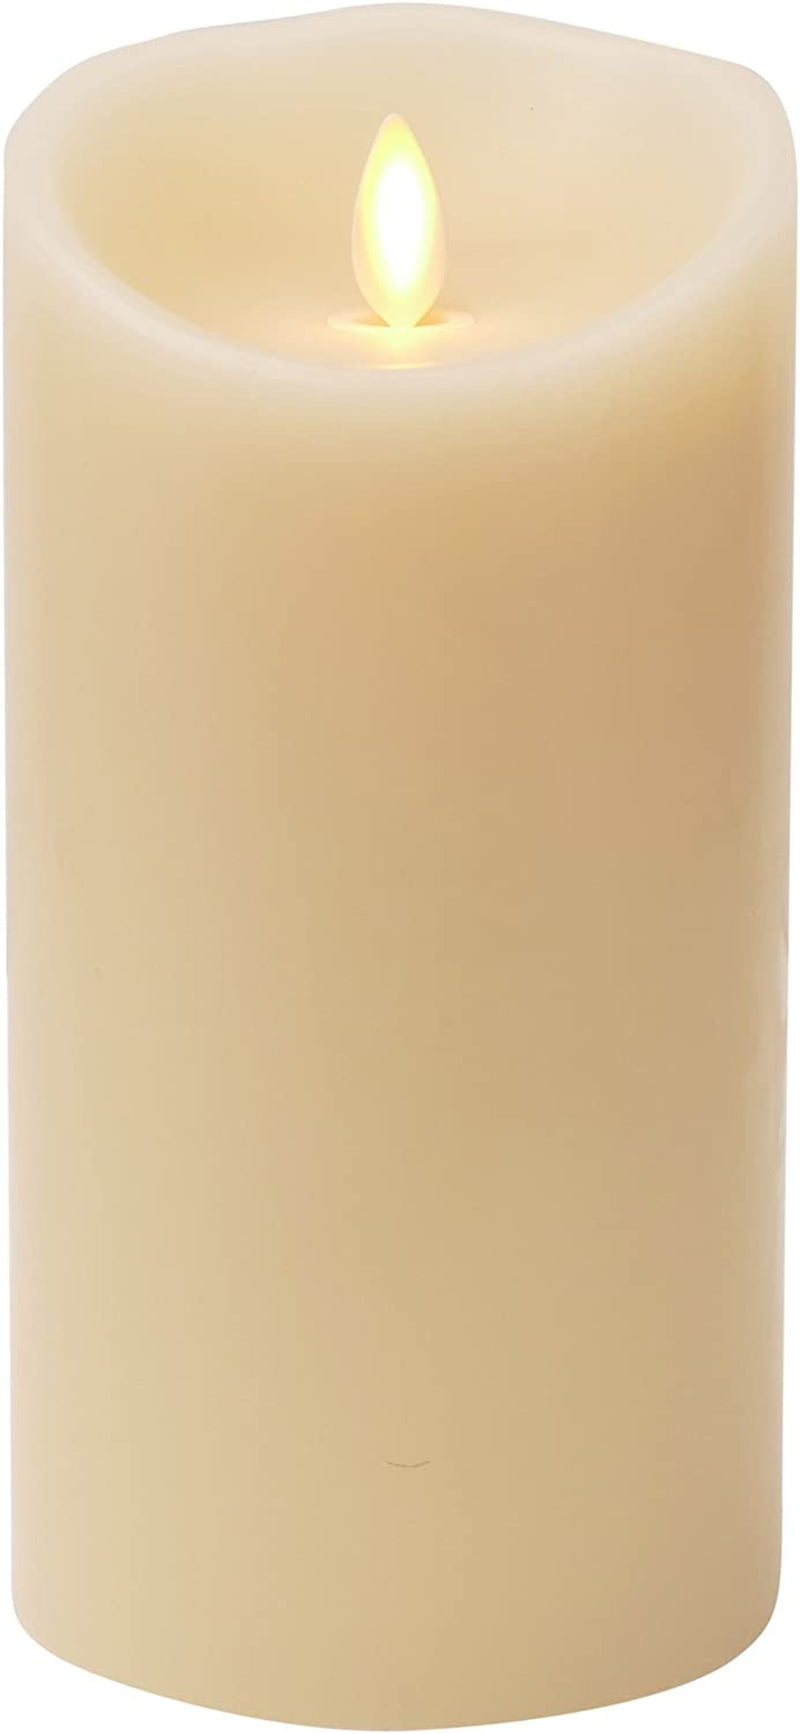 Luminara, Luminara Flameless Candle: Vanilla Scented Moving Flame Candle with Timer (7" Ivory)